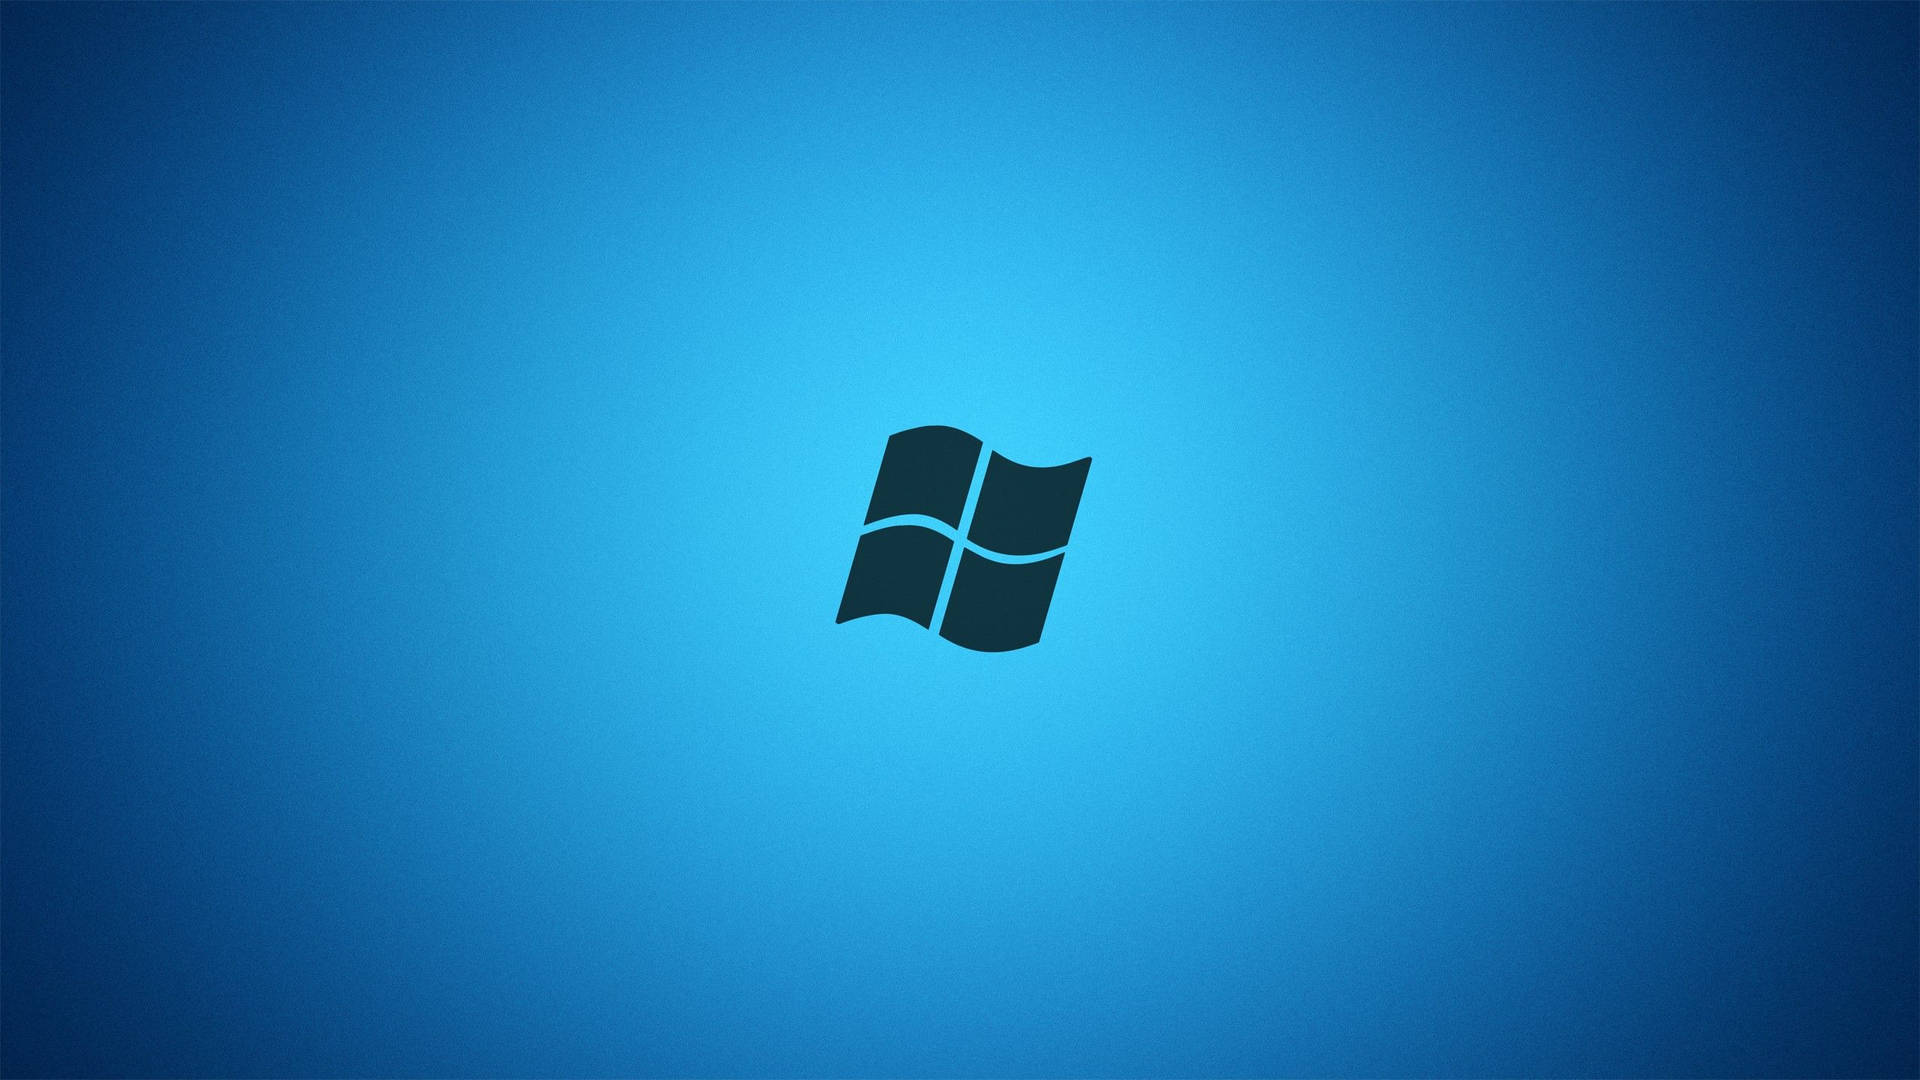 Windows 10 Blue Wallpaper